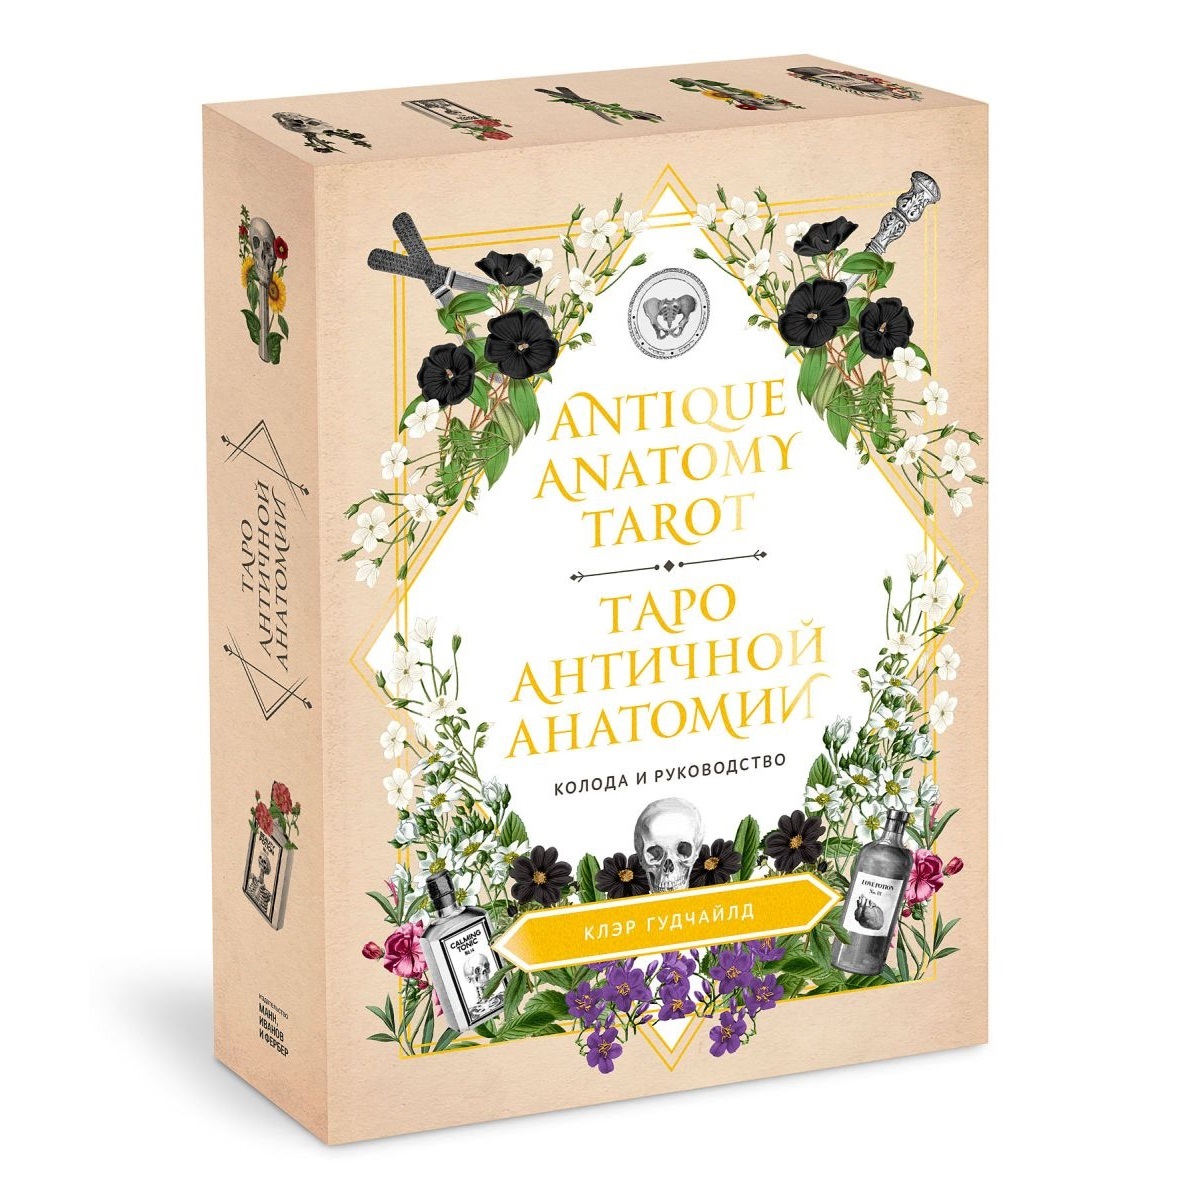 

Таро античной анатомии (Antique Anatomy Tarot) на русском языке